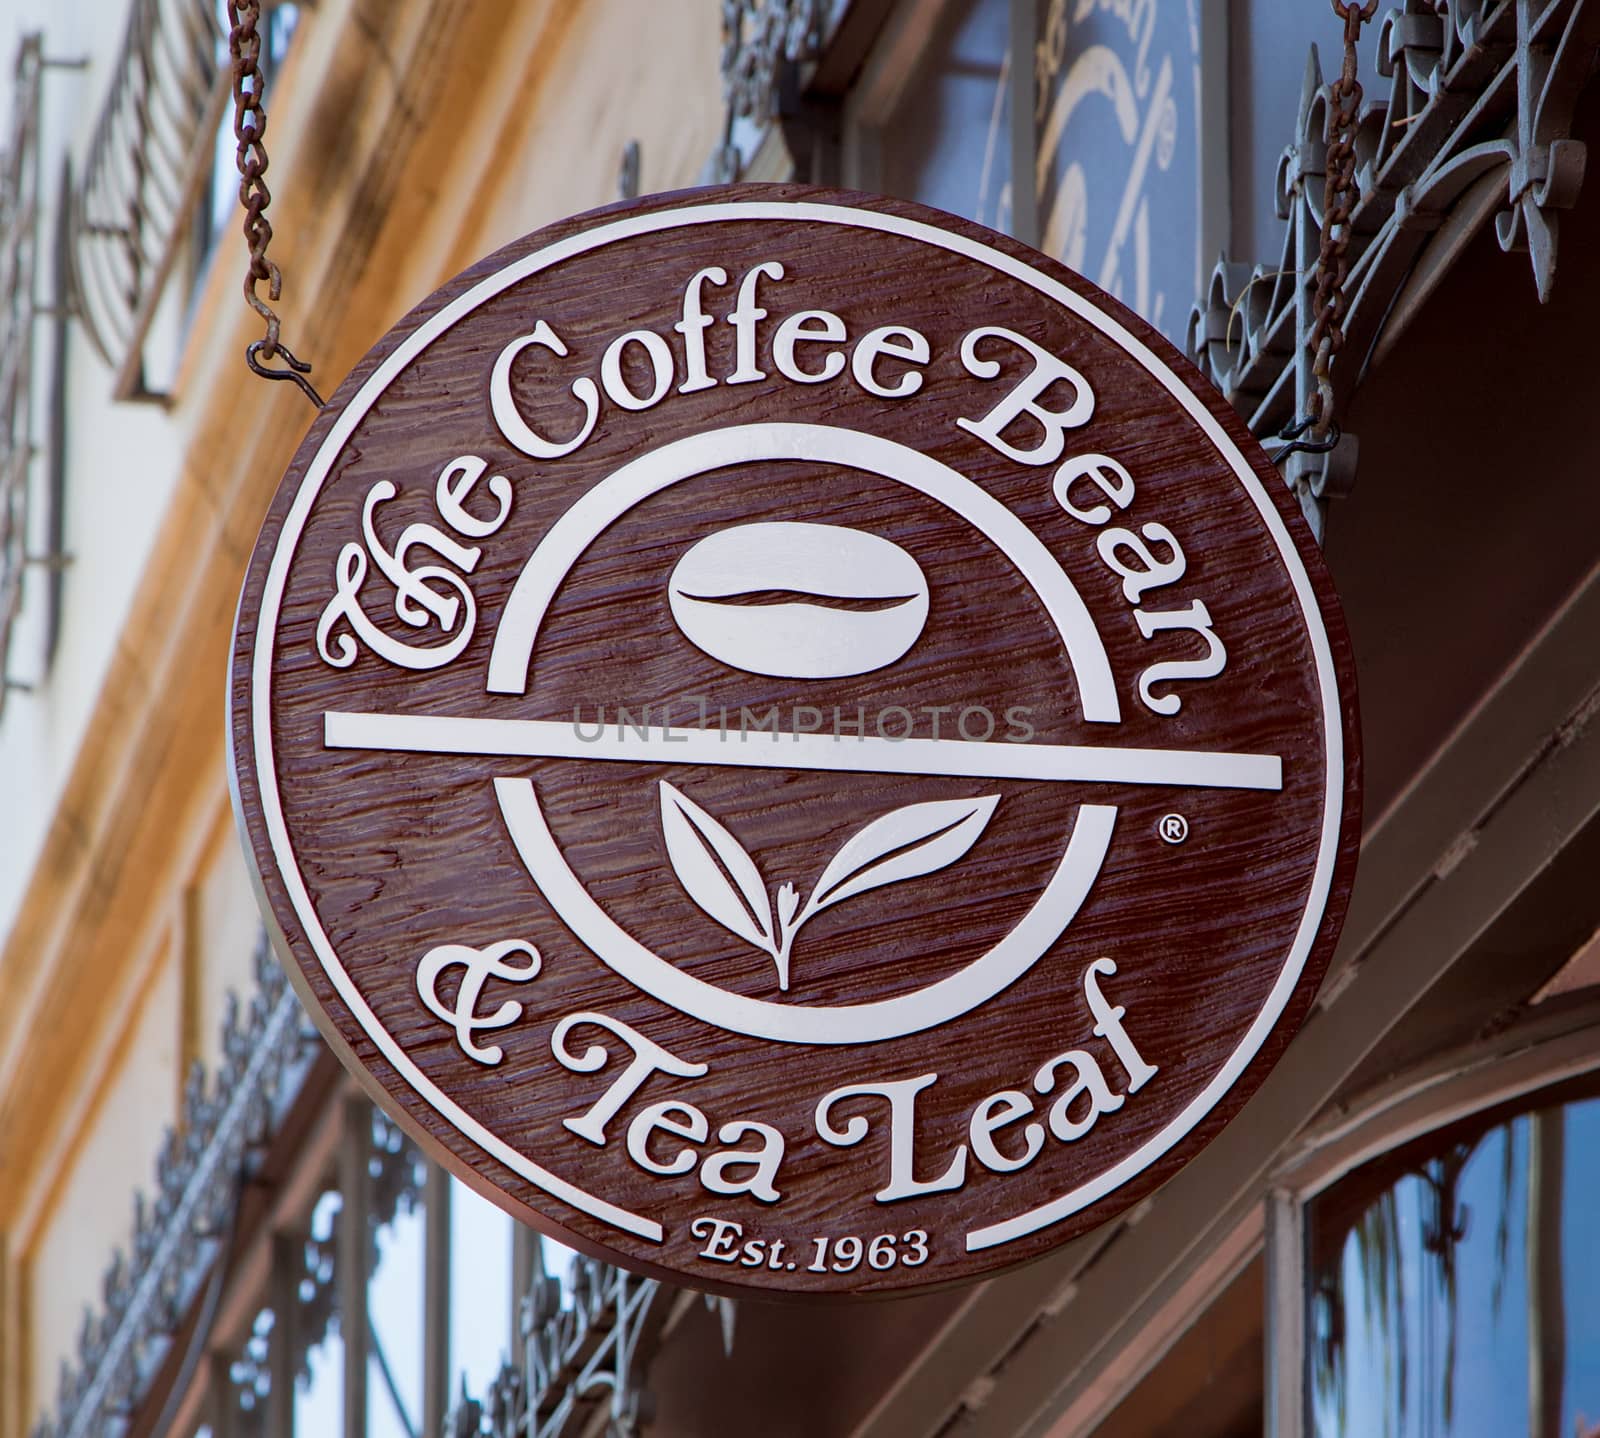 TA BARBARA, CA/USA - APRIL 30, 2016: The Coffee Bean & Tea Leaf exterior and logo. The Coffee Bean is an American coffee chain operated by International Coffee & Tea, LLC.